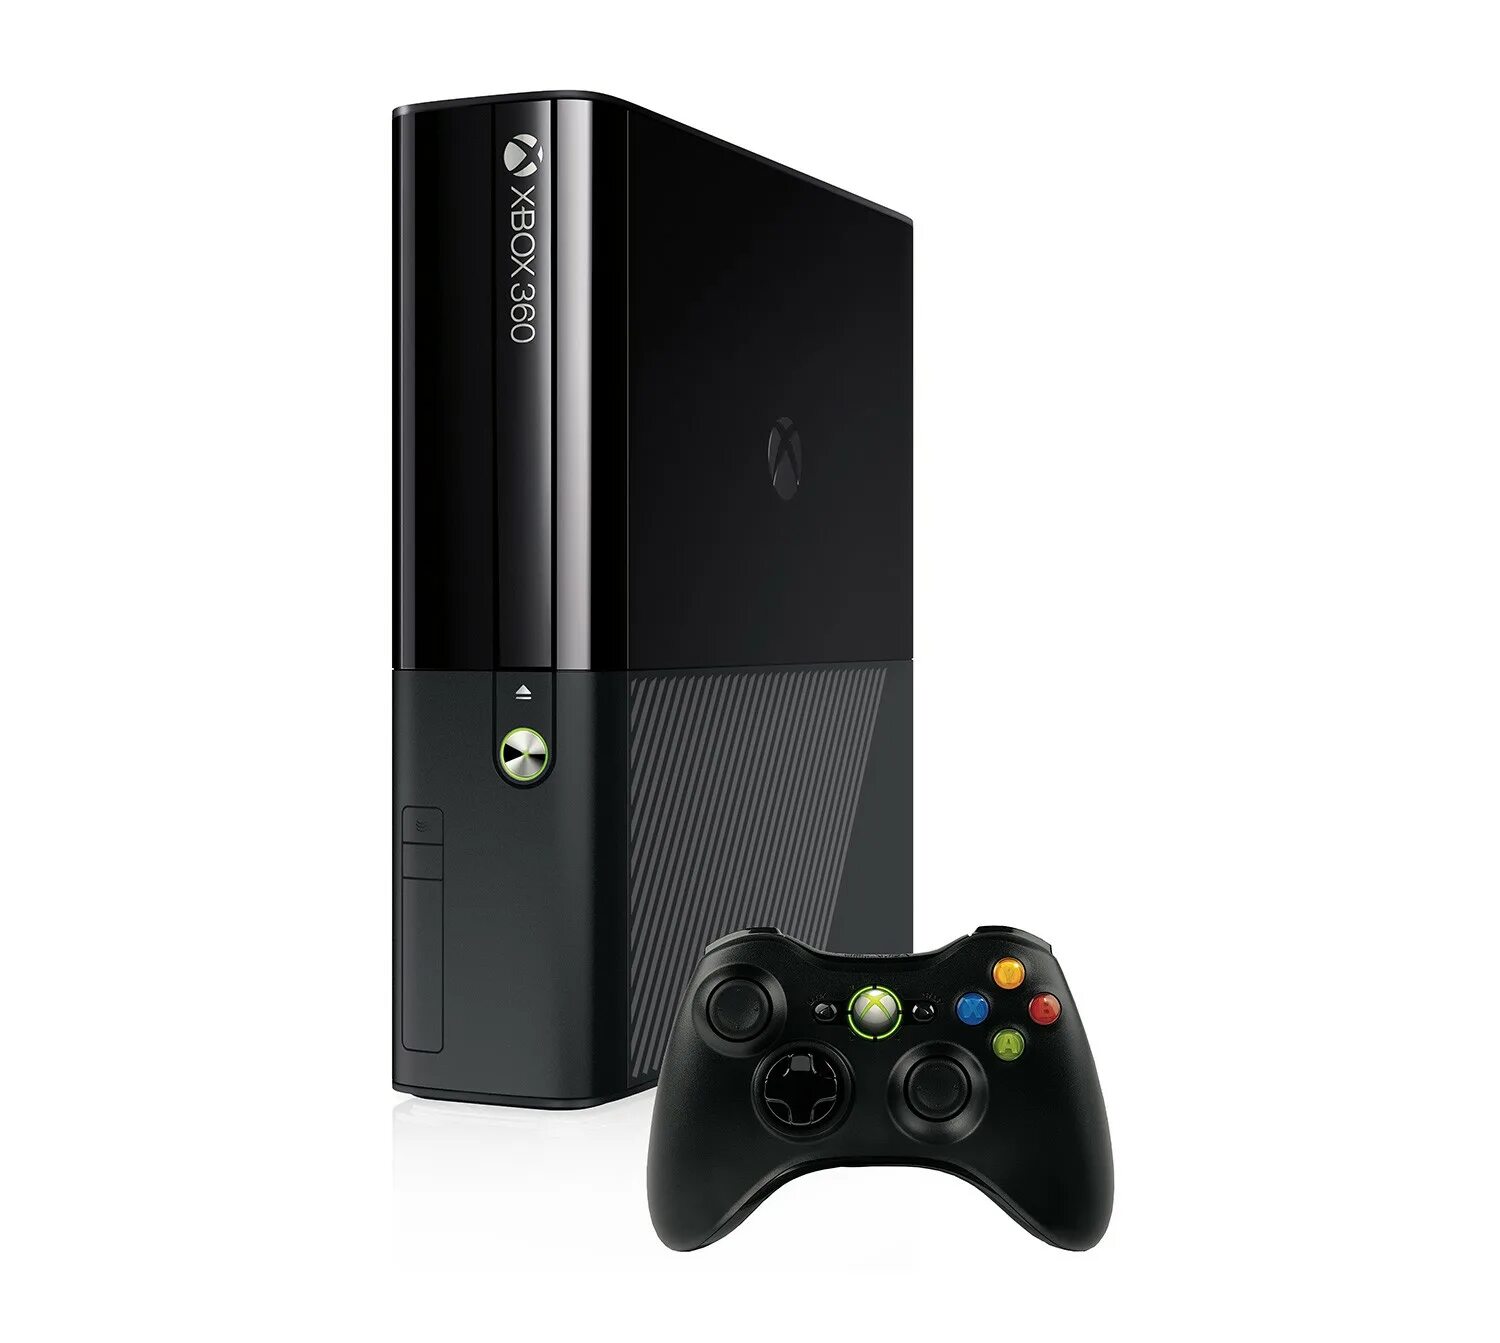 Xbox 360 e. Xbox 360 е 500gb. Игровая приставка Microsoft Xbox 360 e 250 ГБ. Хбокс 360 слим. Xbox 360 купить новый